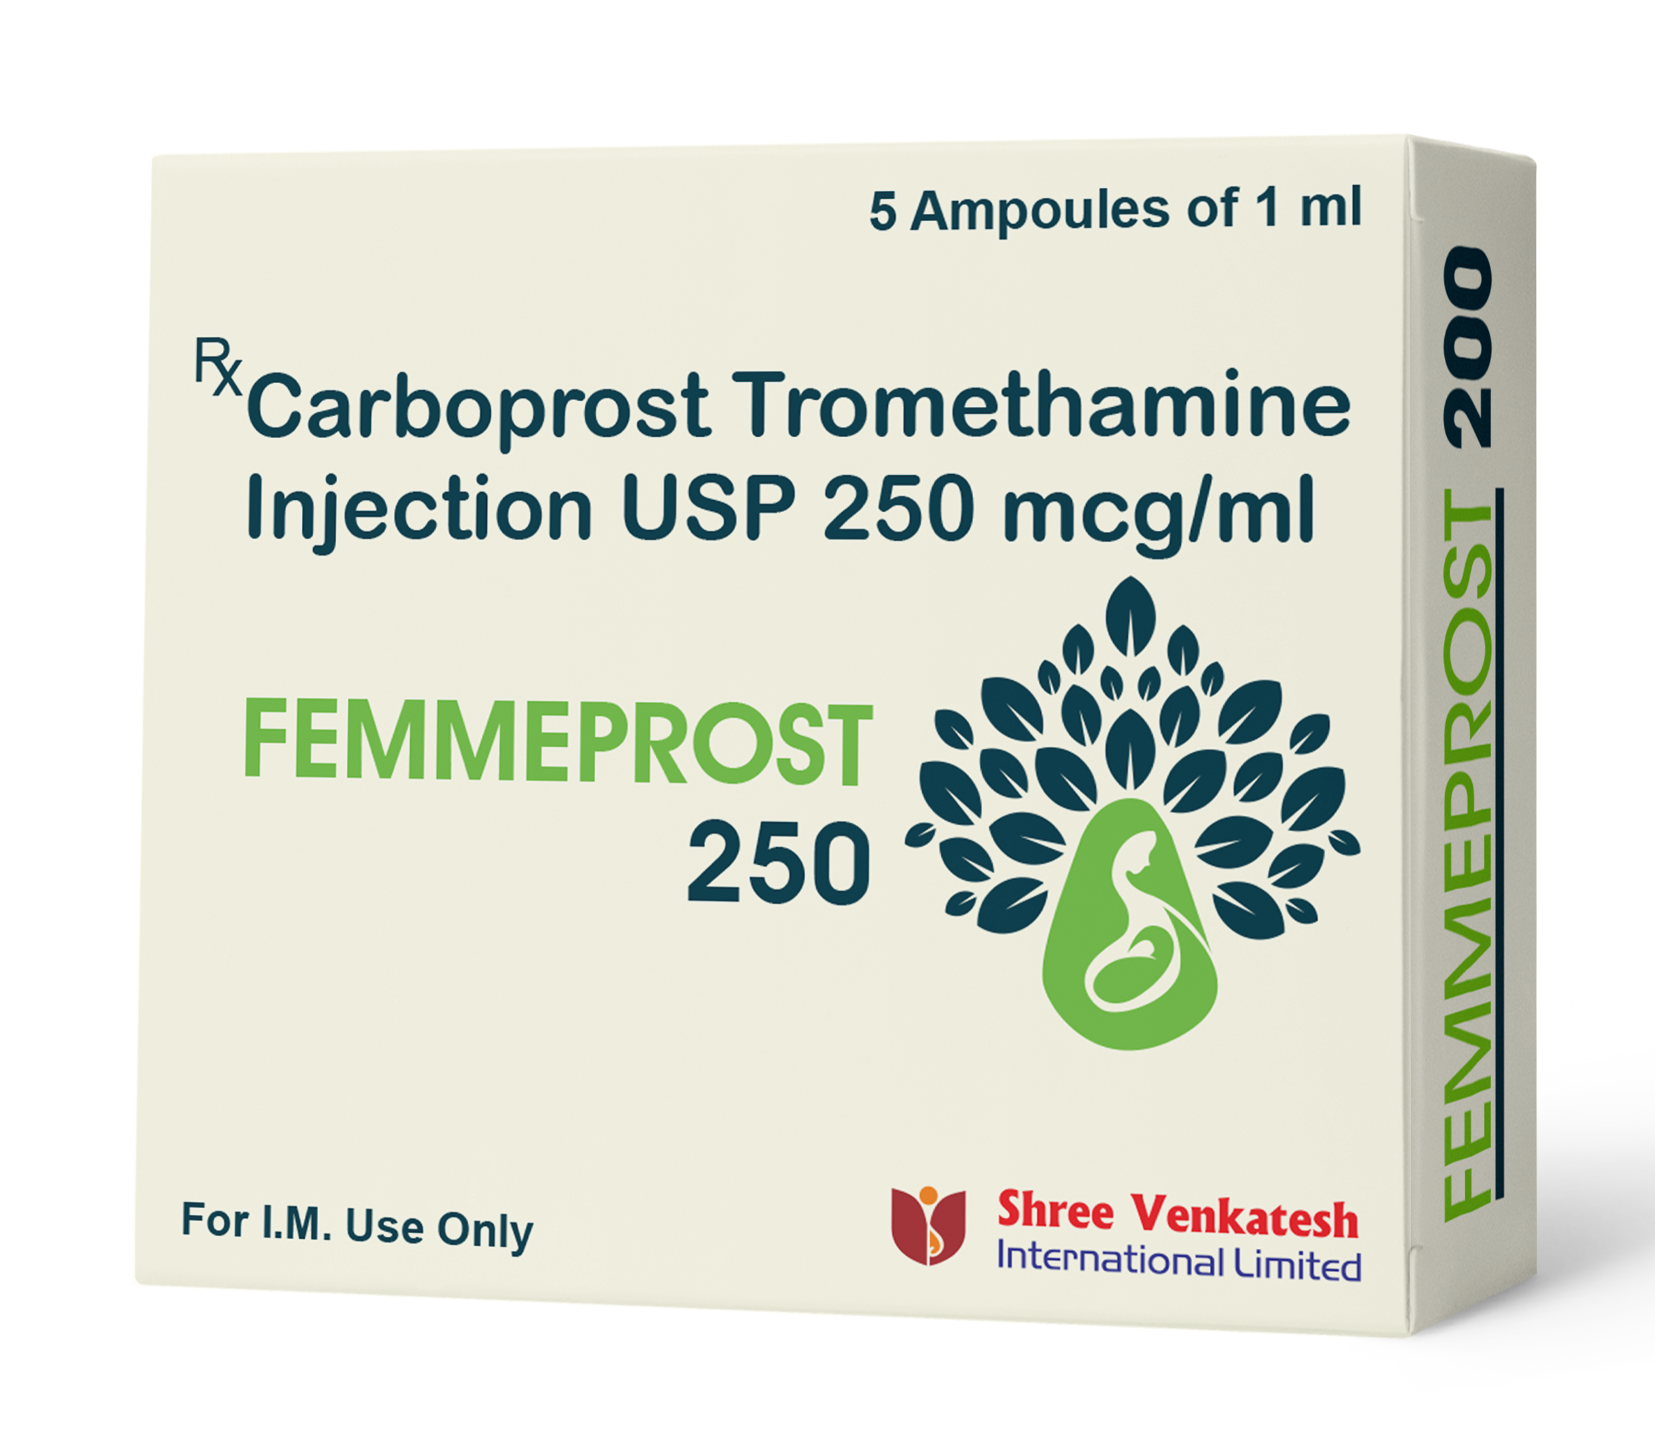 Carboprost Tromethamine Injection USP 250 mcg/ml